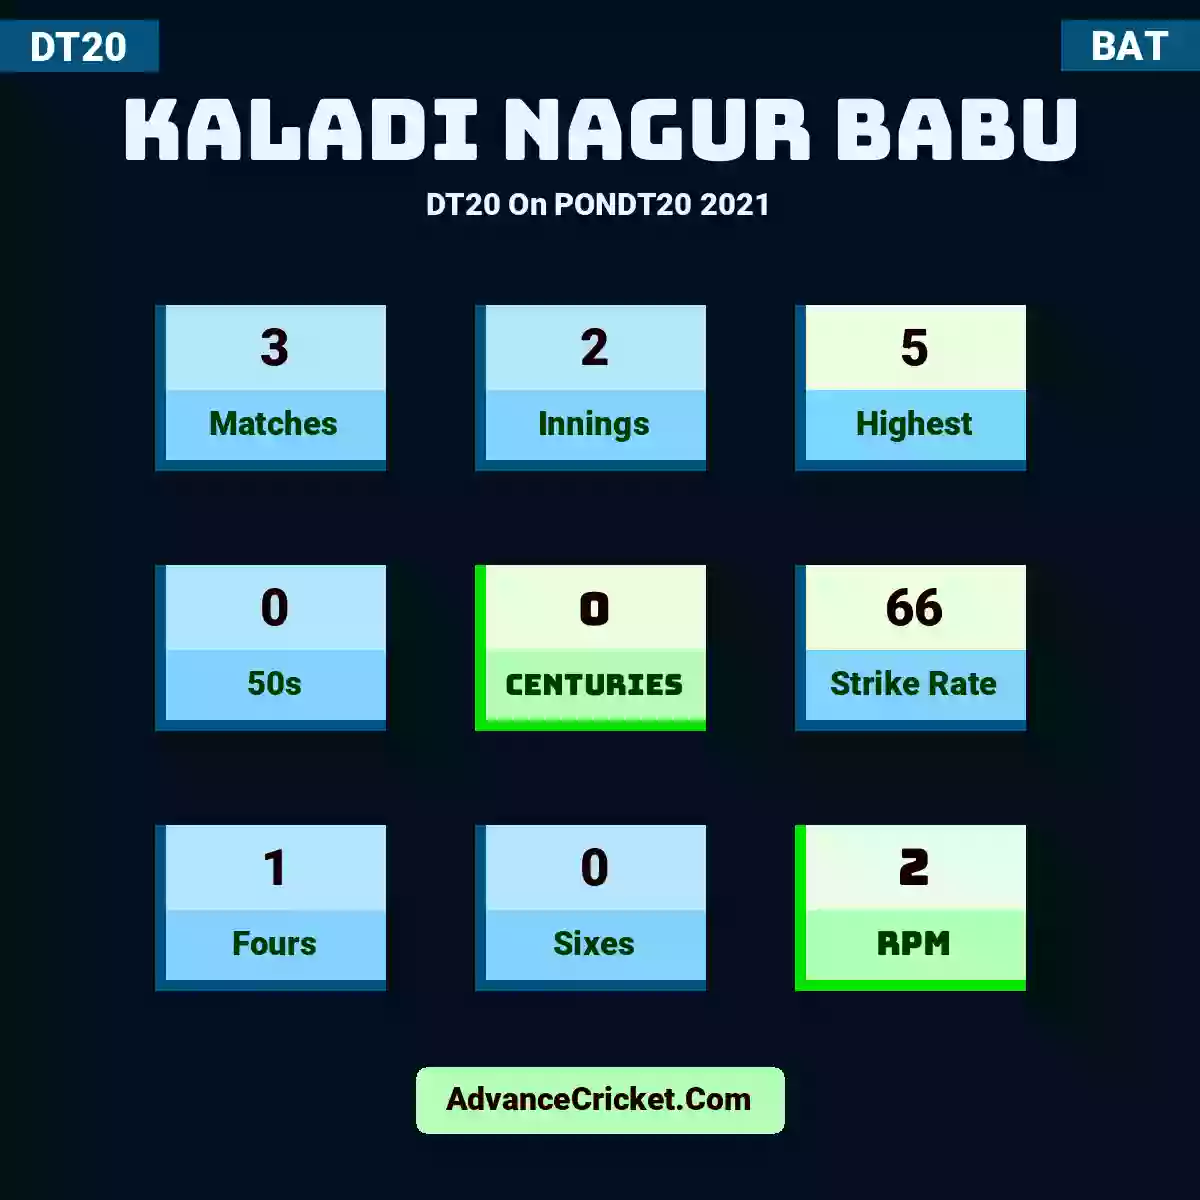 Kaladi Nagur Babu DT20  On PONDT20 2021, Kaladi Nagur Babu played 3 matches, scored 5 runs as highest, 0 half-centuries, and 0 centuries, with a strike rate of 66. K.Babu hit 1 fours and 0 sixes, with an RPM of 2.